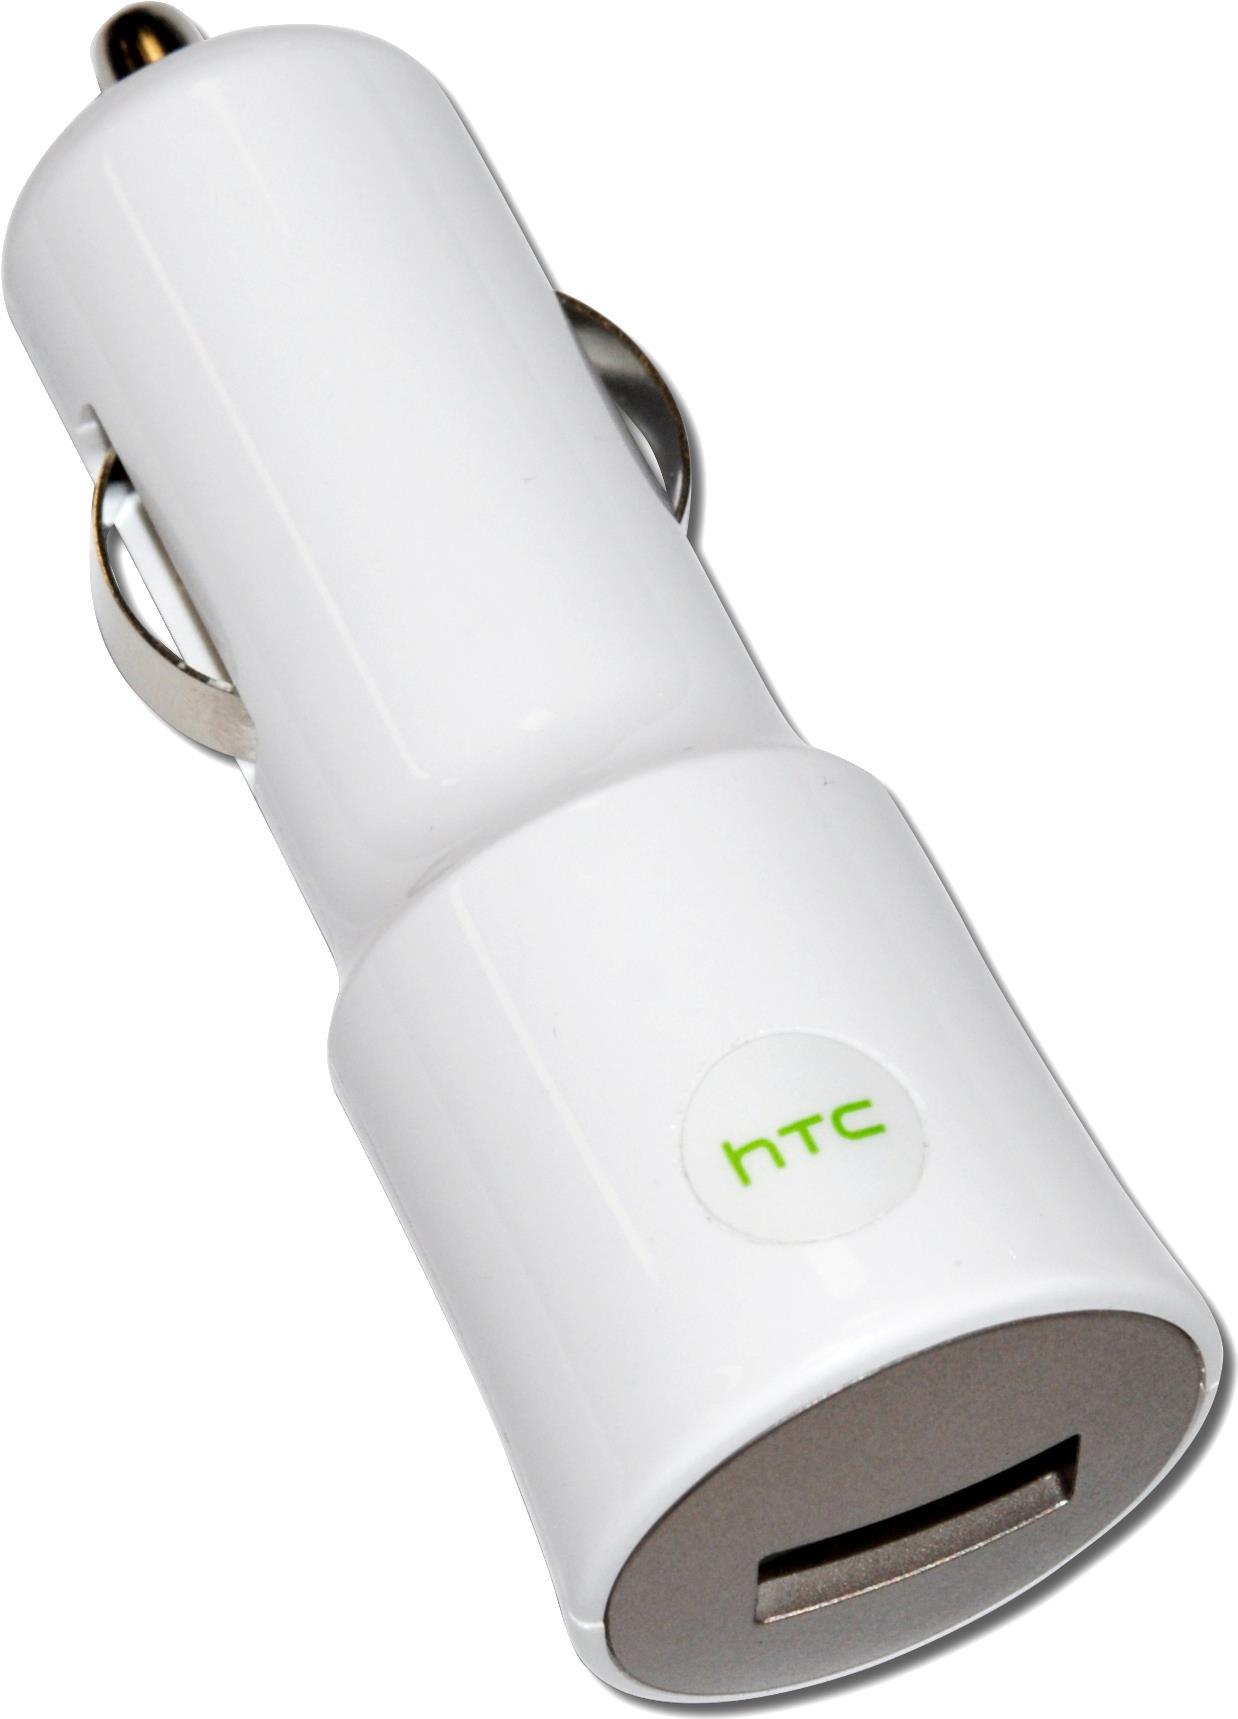 HTC Car Charger CC C120, USB, 1000mA, white, Bulk (CC C120)